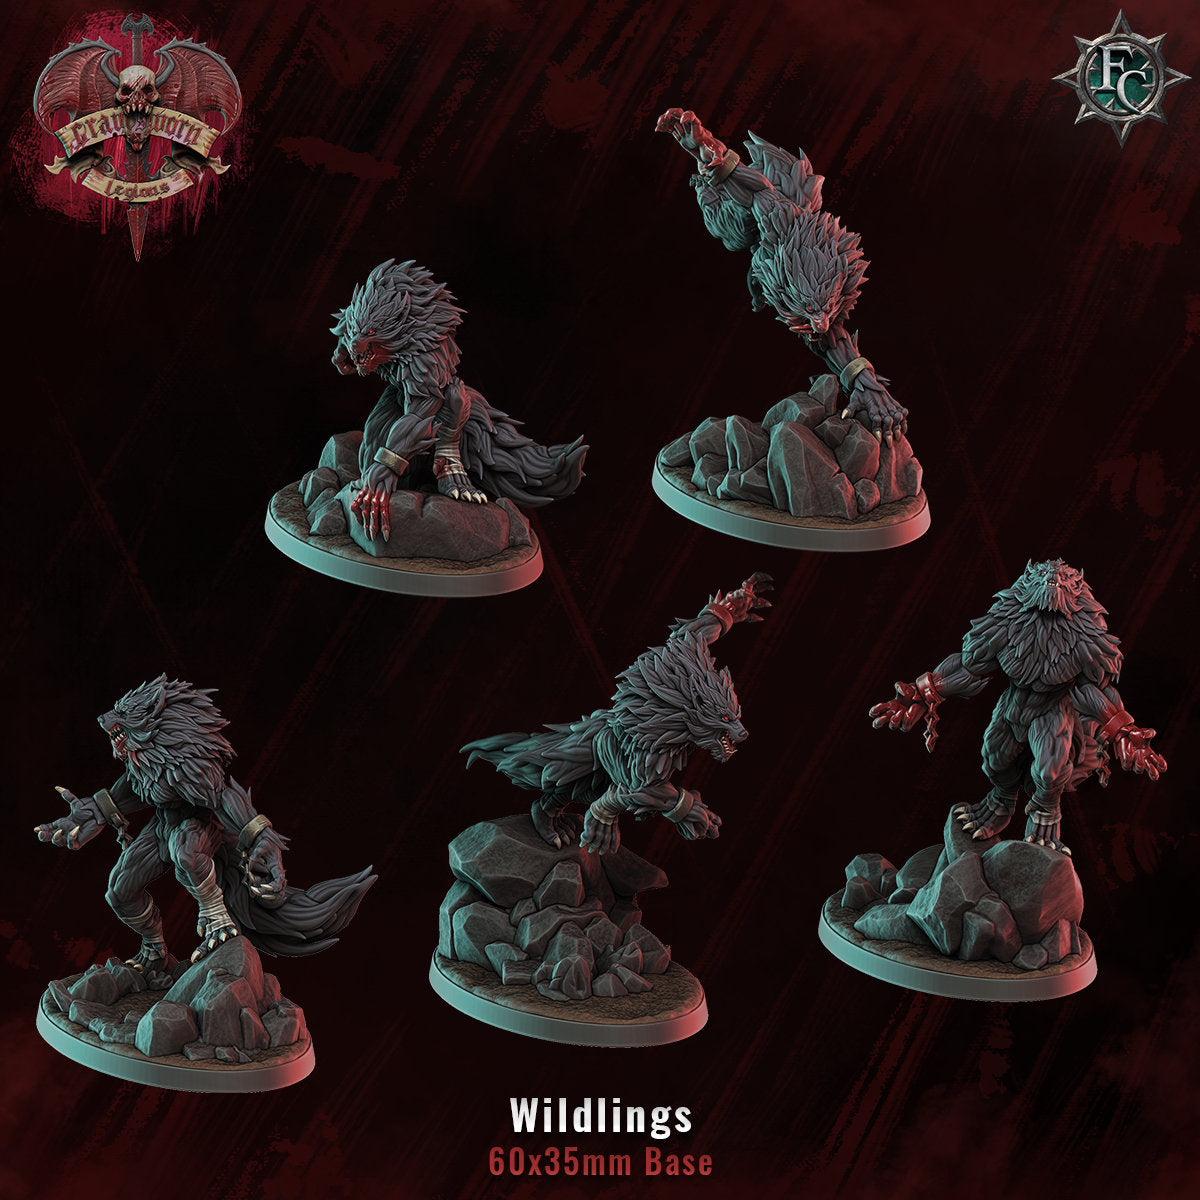 a set of six miniature figurines of a demon